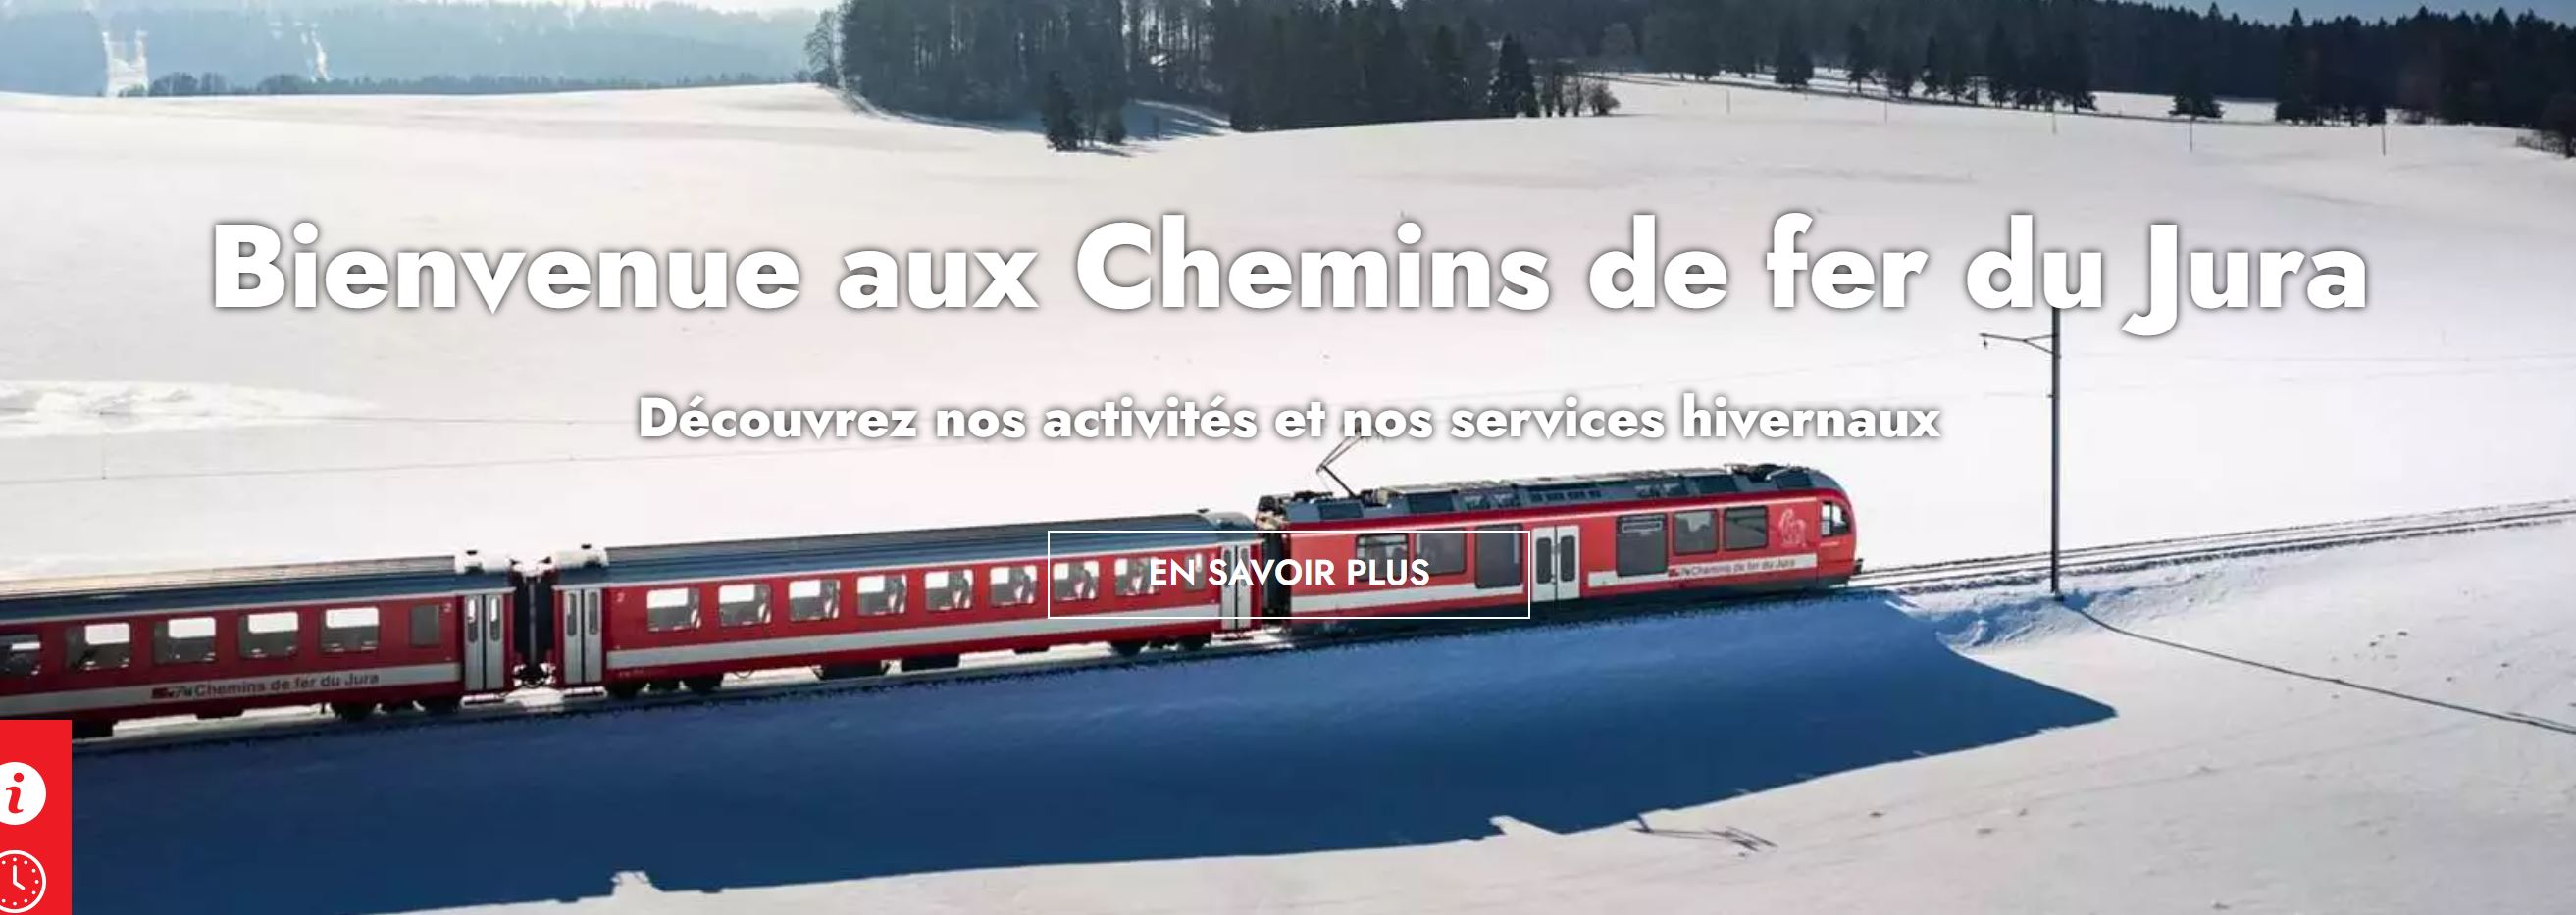 Fotos - Les CJ-Chemins de fer du Jura- - 2